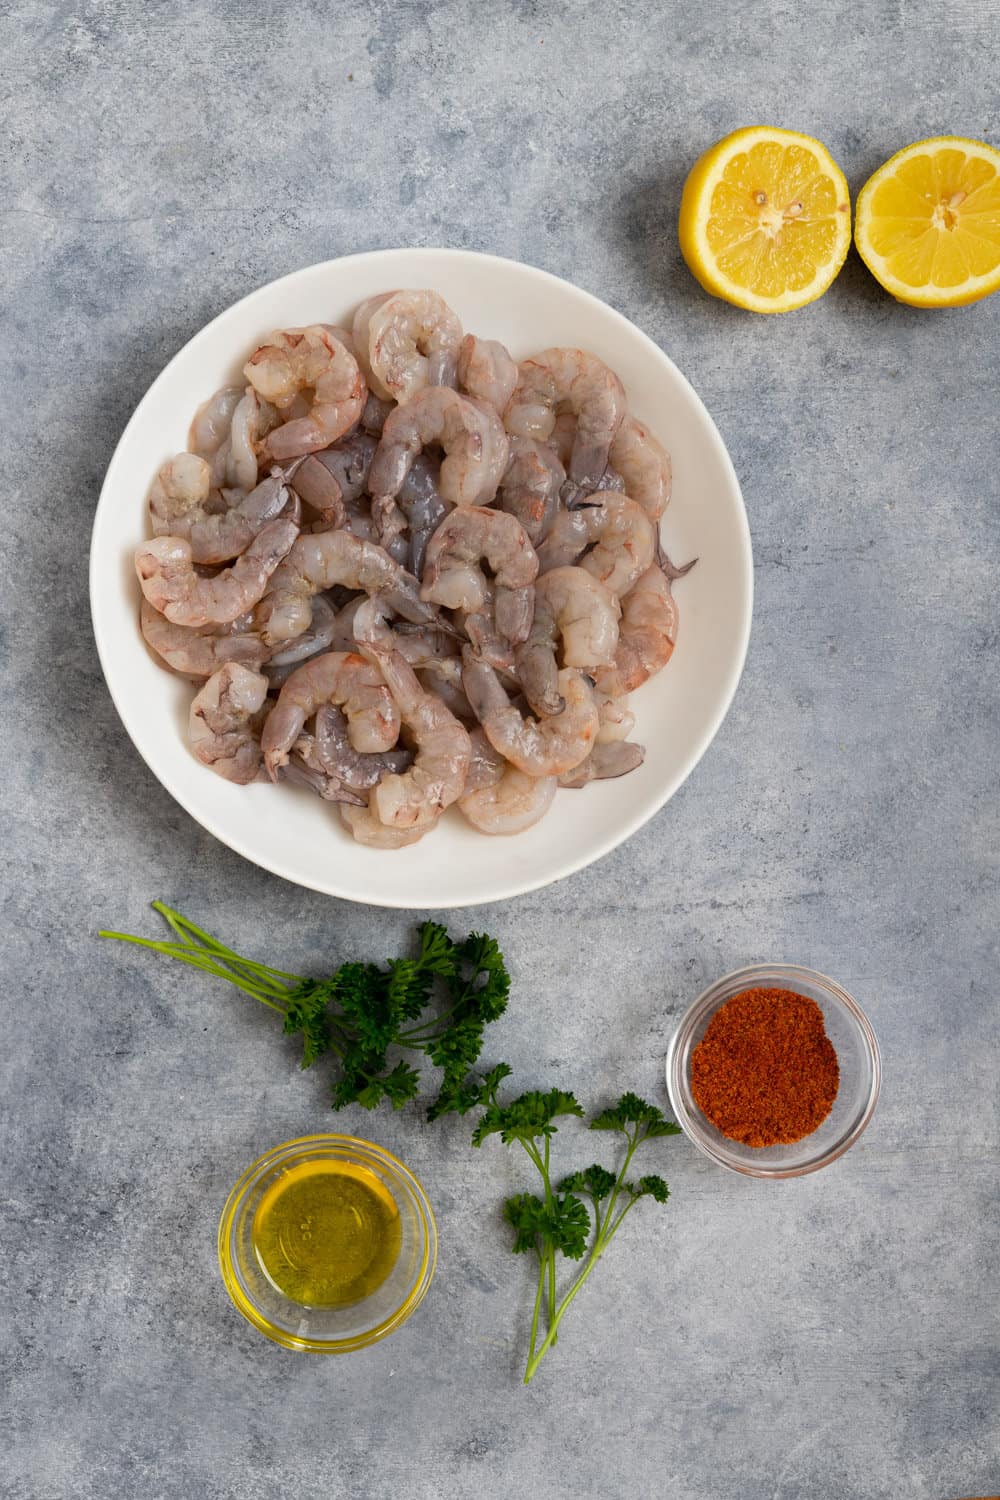 Ingredients to make old bay shrimp.